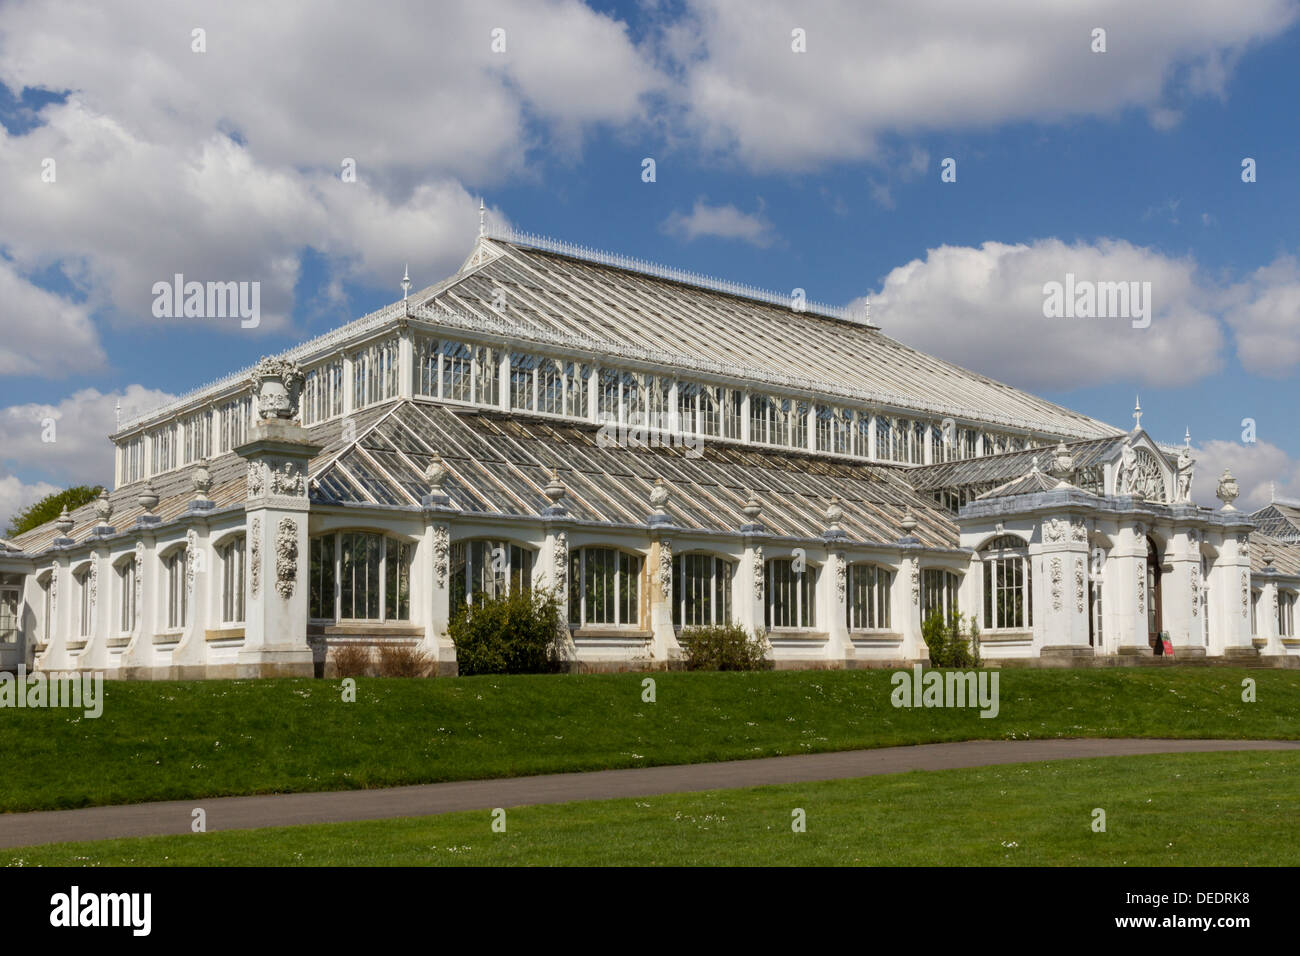 Chambre tempérée, Royal Botanic Gardens, Kew, UNESCO World Heritage Site, Londres, Angleterre, Royaume-Uni, Europe Banque D'Images